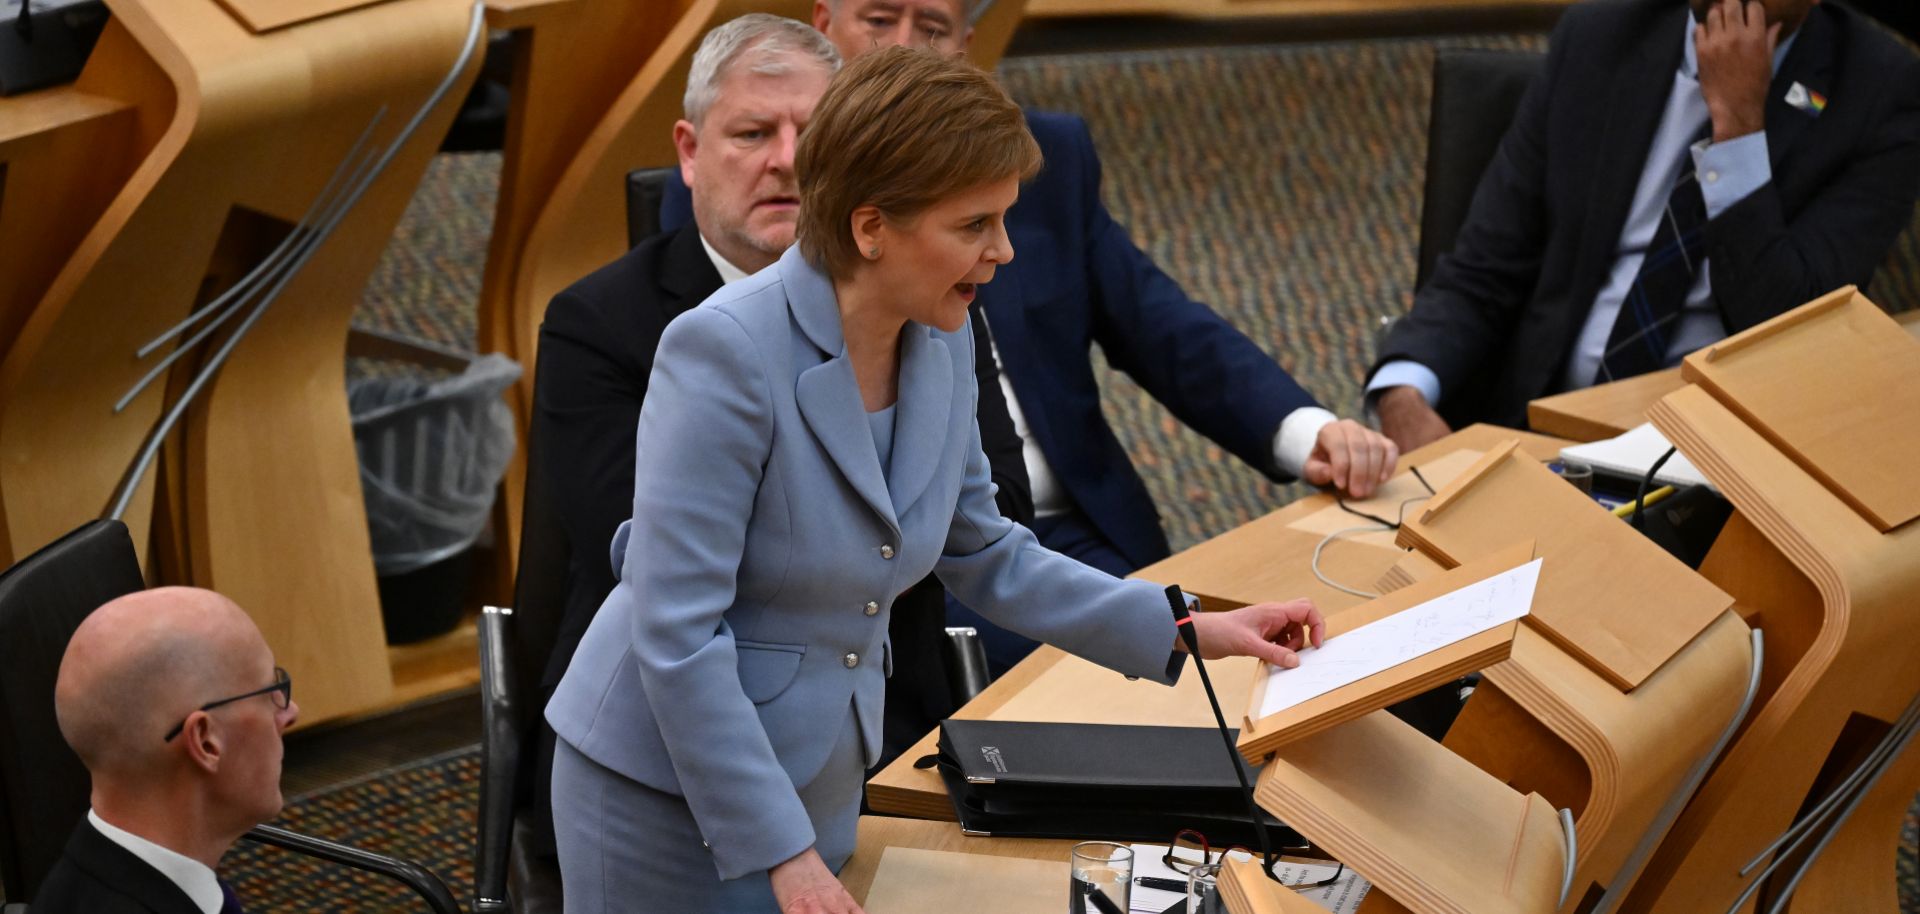 Scotland's First Minister Nicola Sturgeon addresses lawmakers in the Scottish parliament in Edinburgh on June 28, 2022.